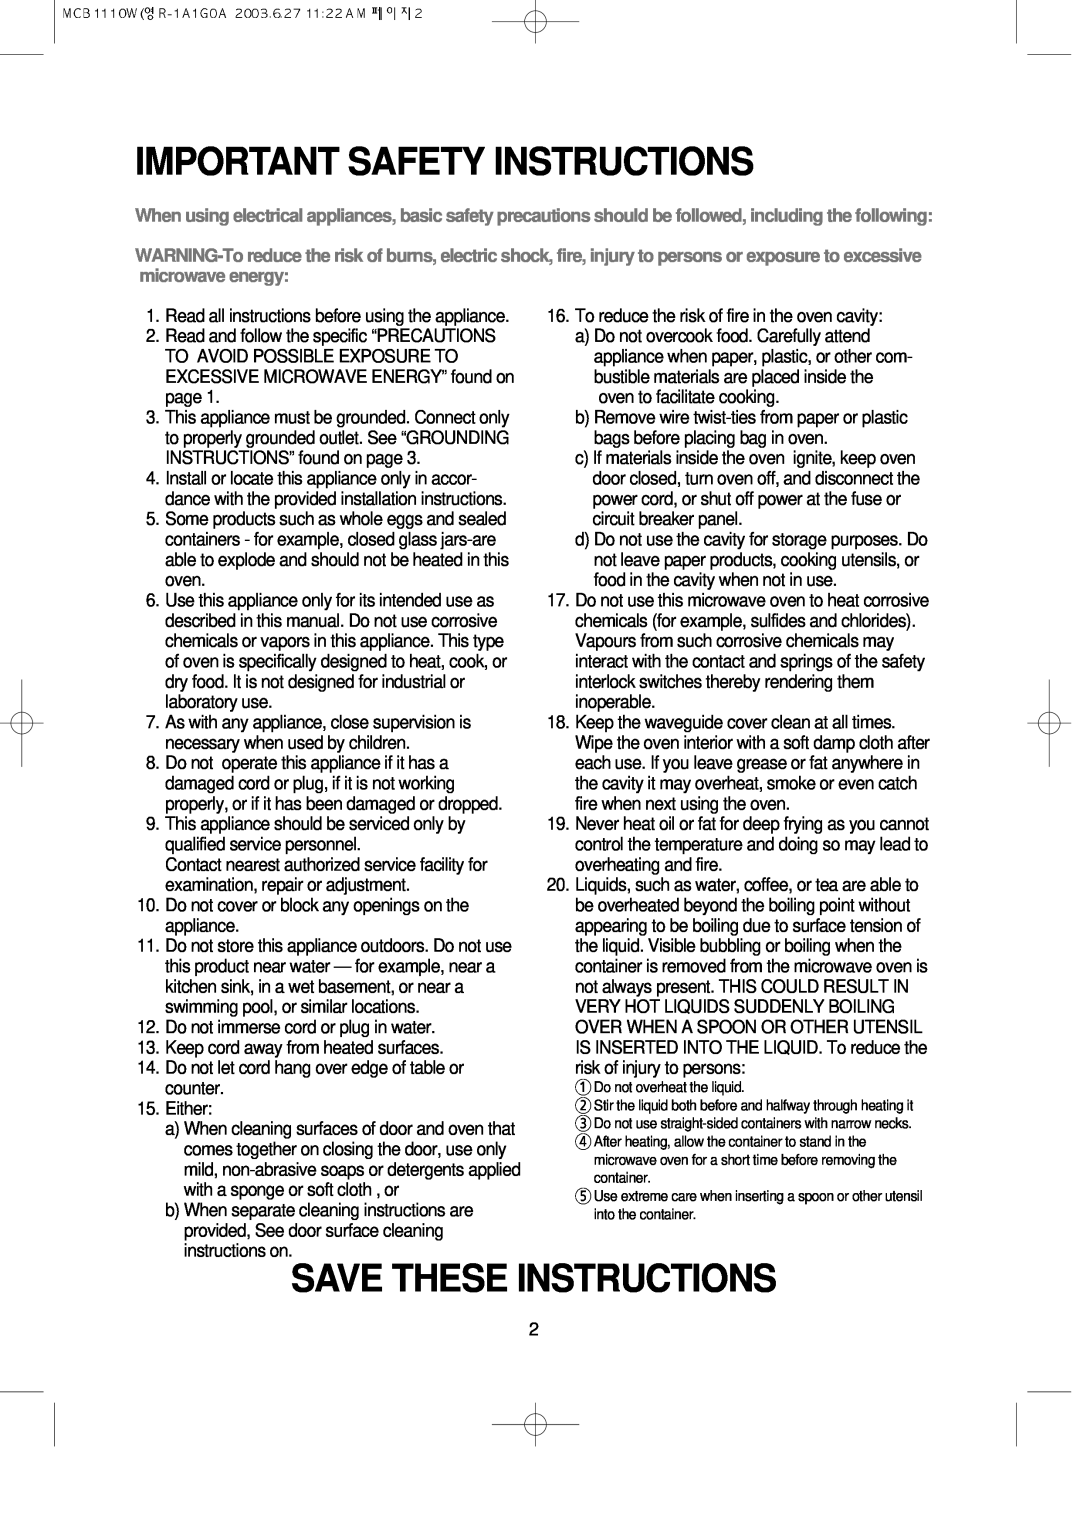 Magic Chef MCB1110W instruction manual Important Safety Instructions, Save These Instructions 